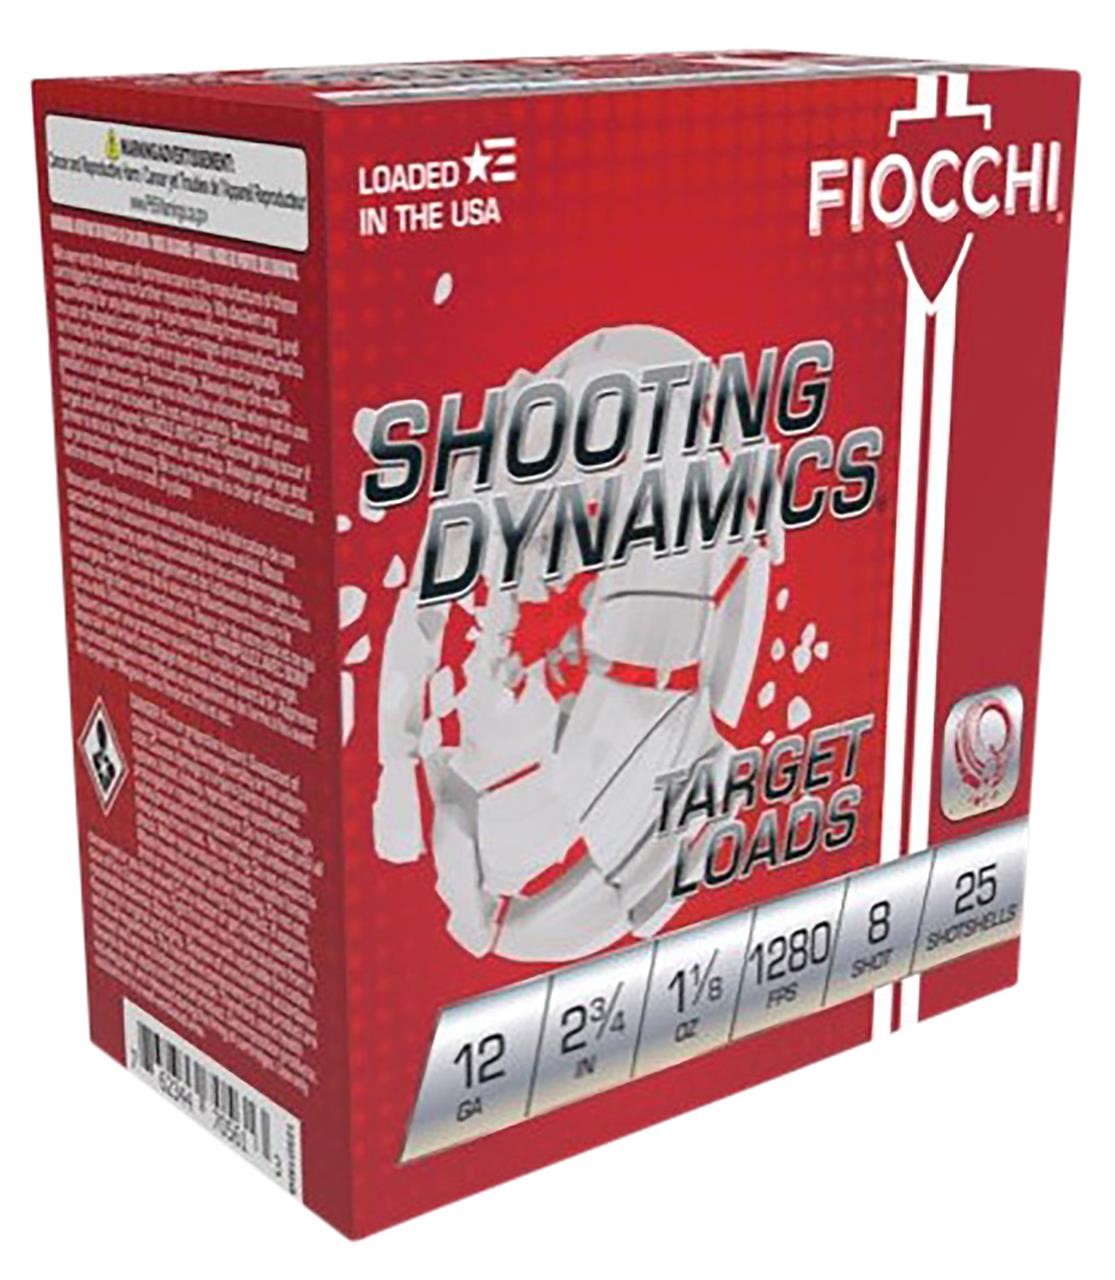 Fiocchi 12SDHV8 Shooting Dynamics Target 12 Gauge